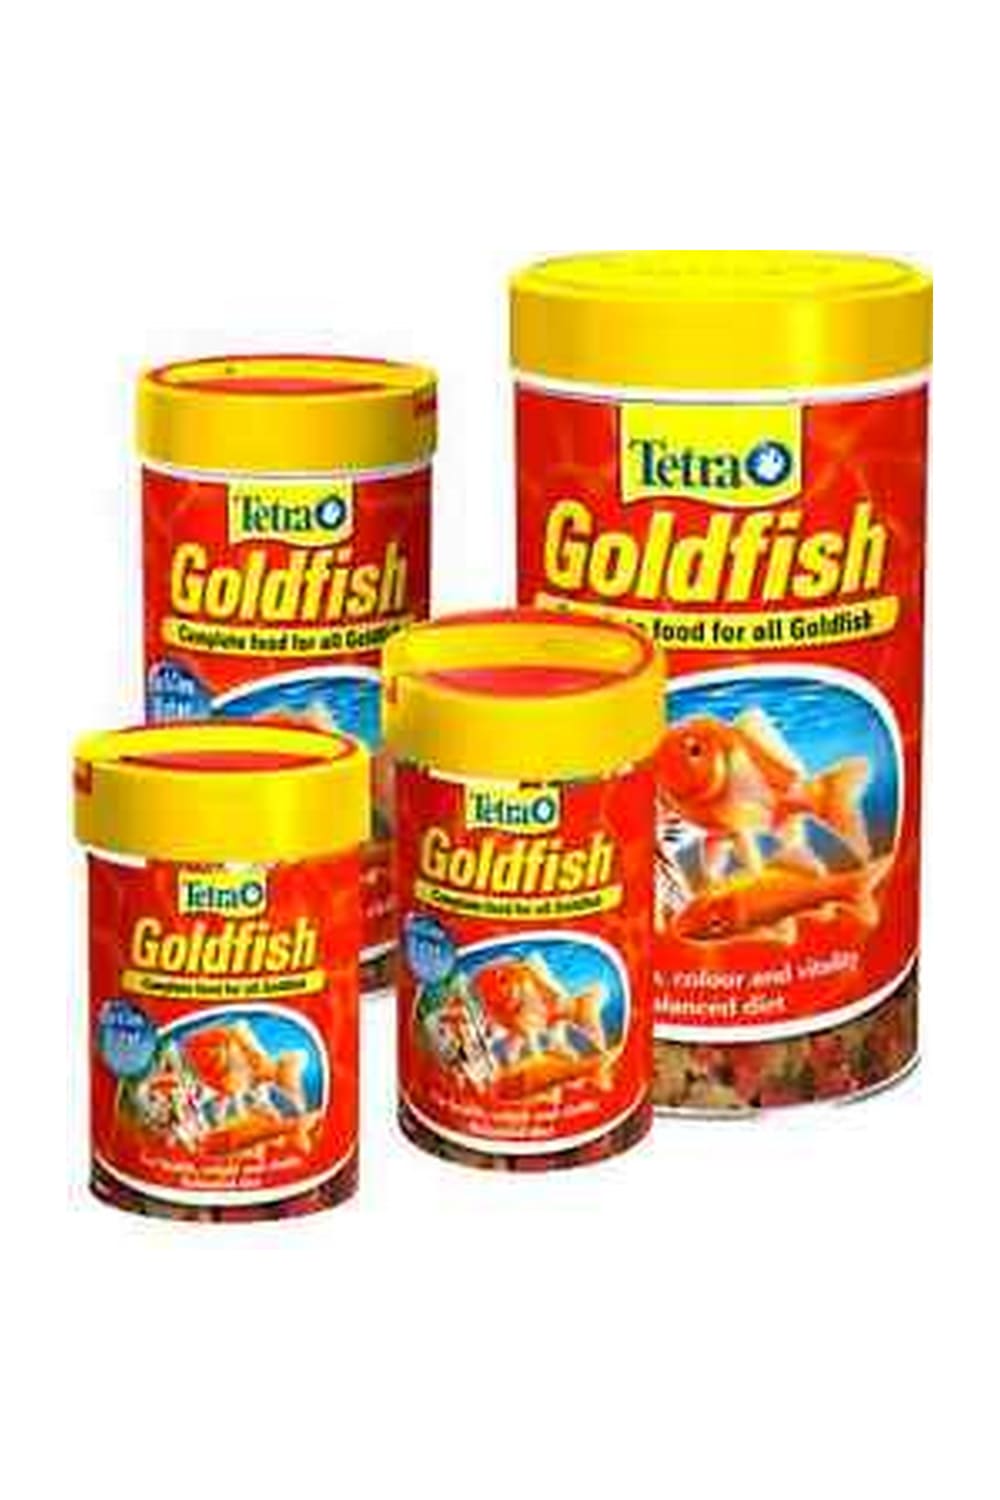 Tetra Goldfish Fish Food (May Vary) (0.70 oz)